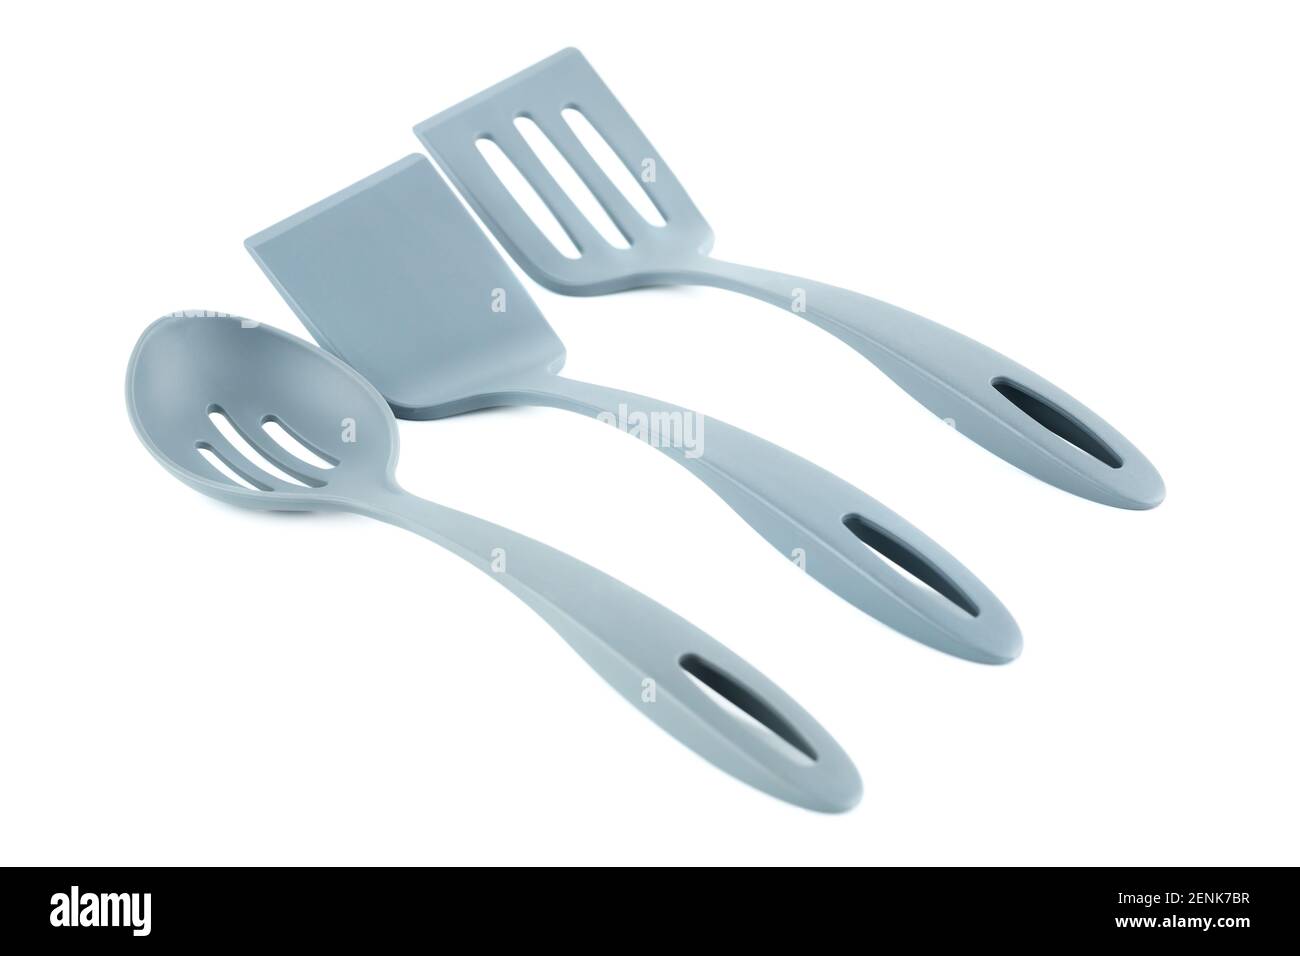 Set of gray plastic kitchen utensils isolated on white background. Stock Photo